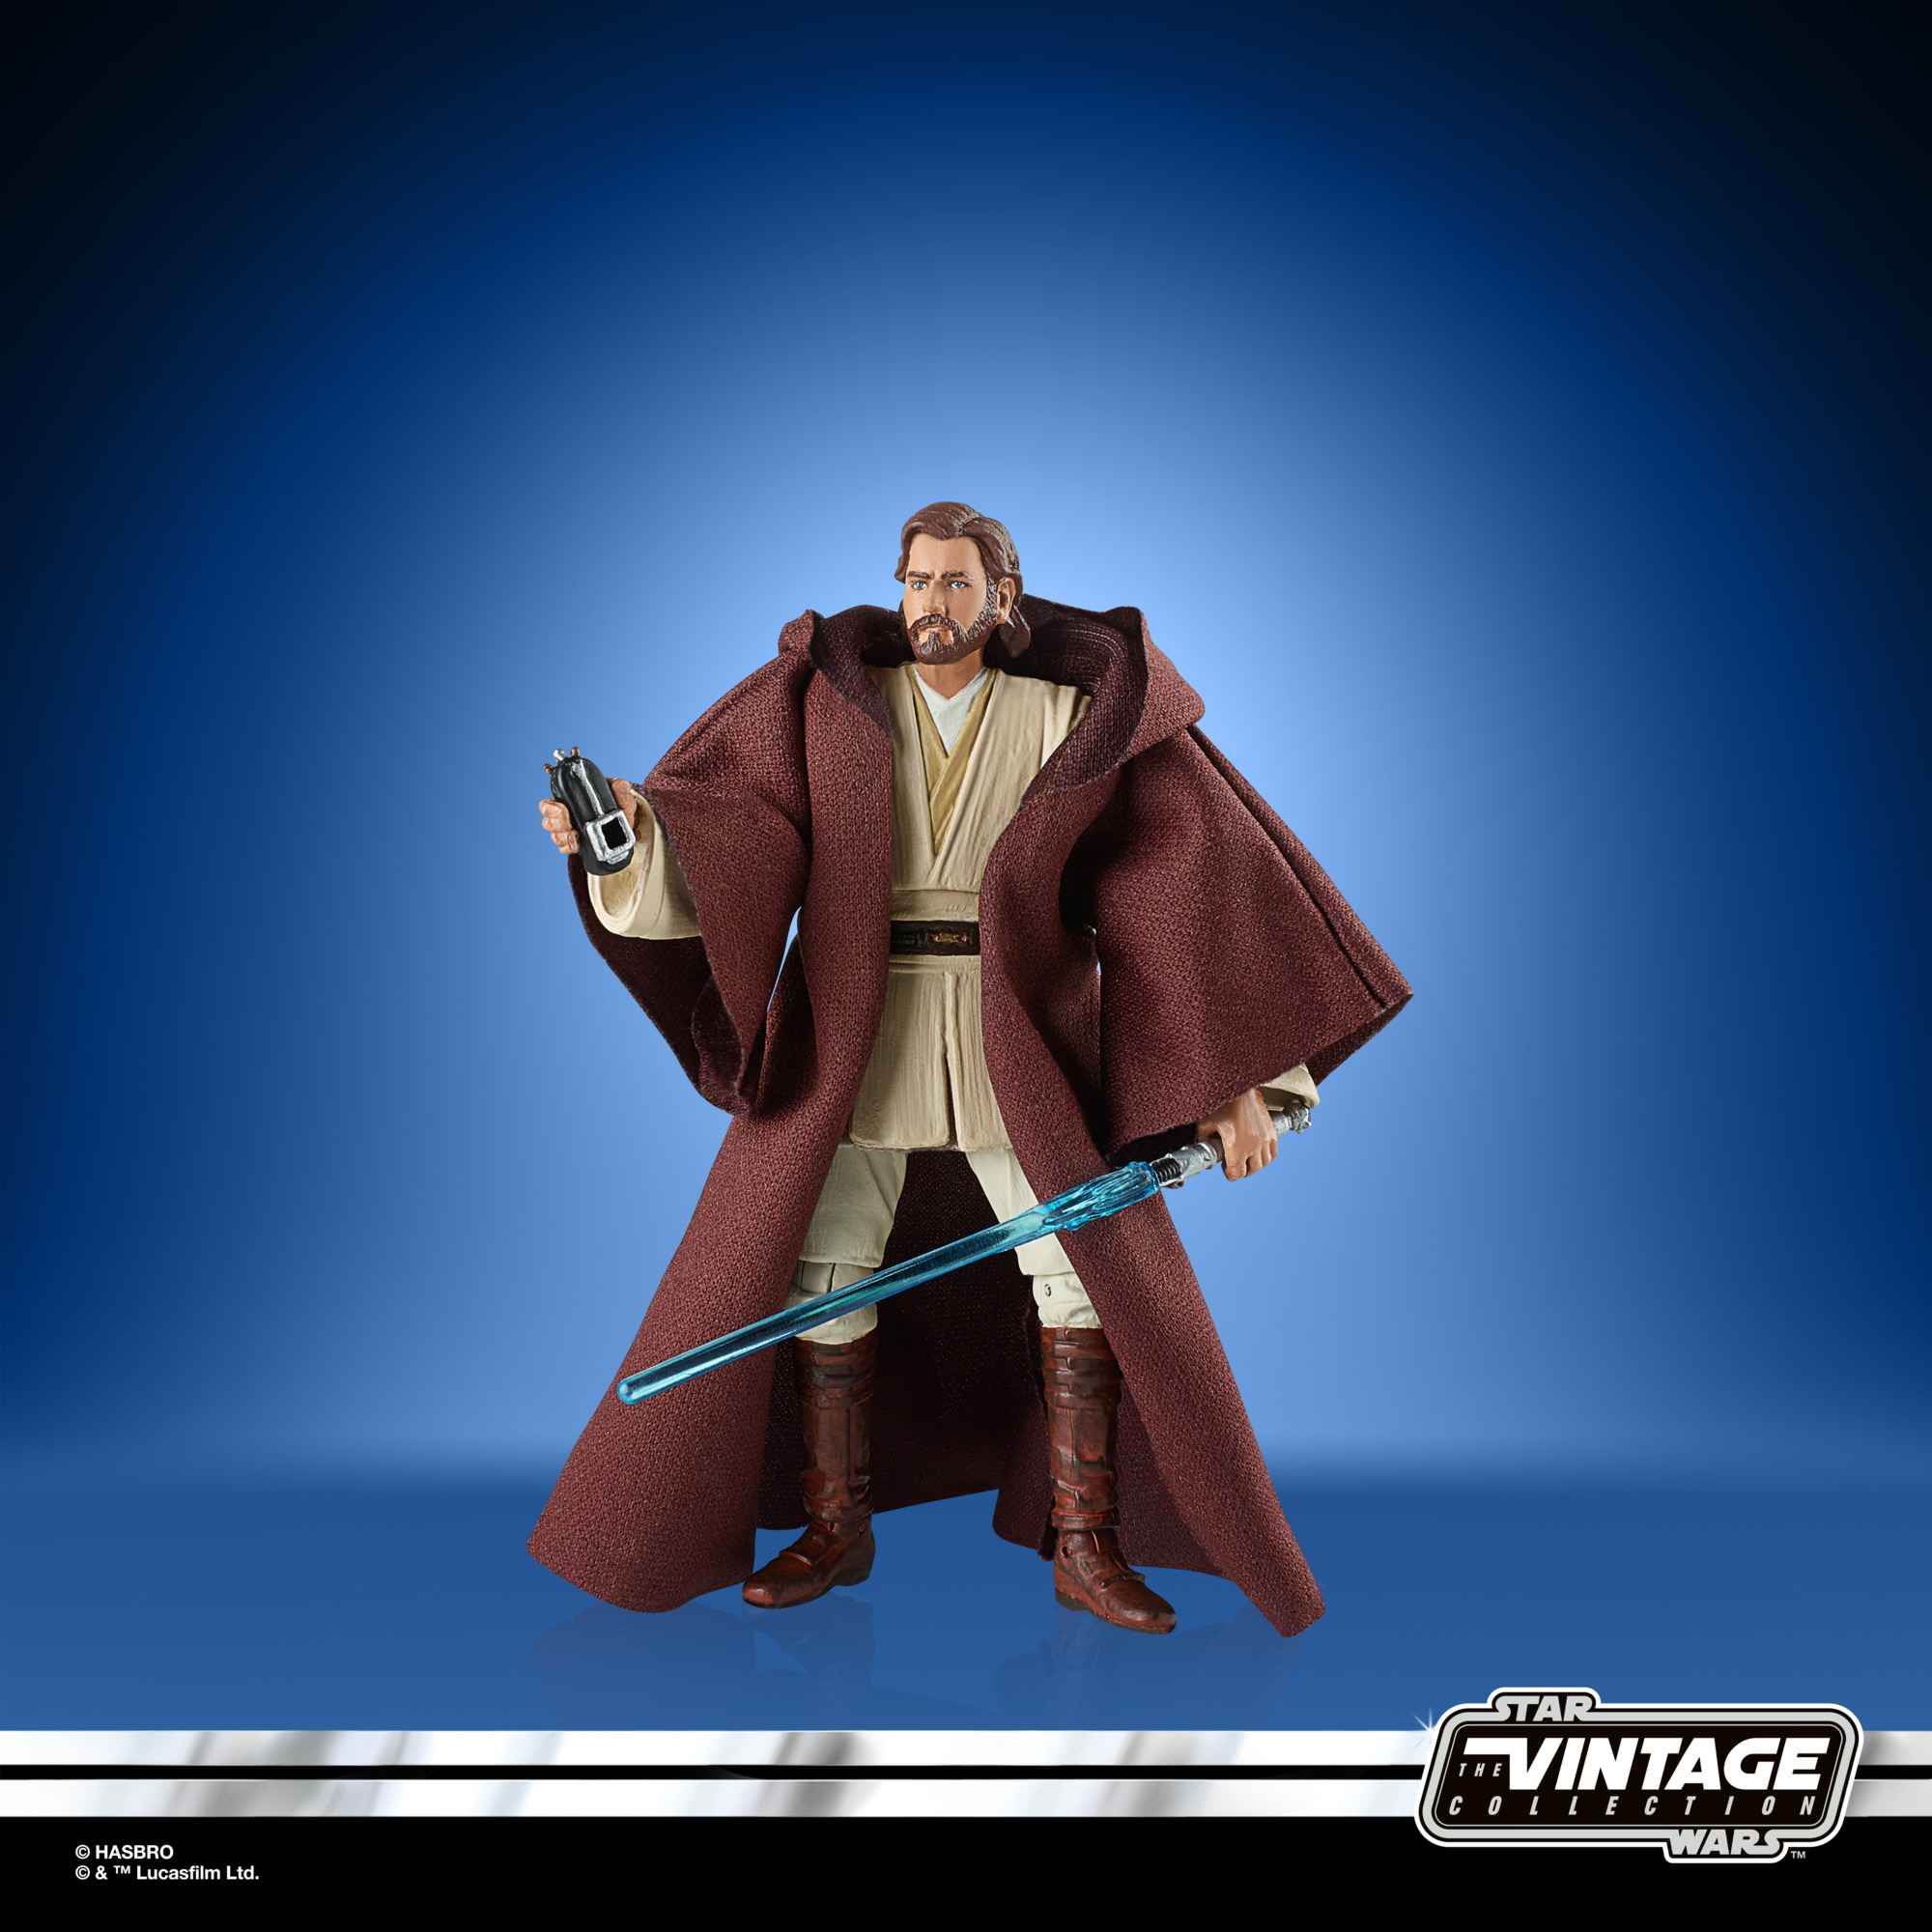 Star Wars The Vintage Collection Actionfigur 2022 Obi-Wan Kenobi F44925X0 5010993964581